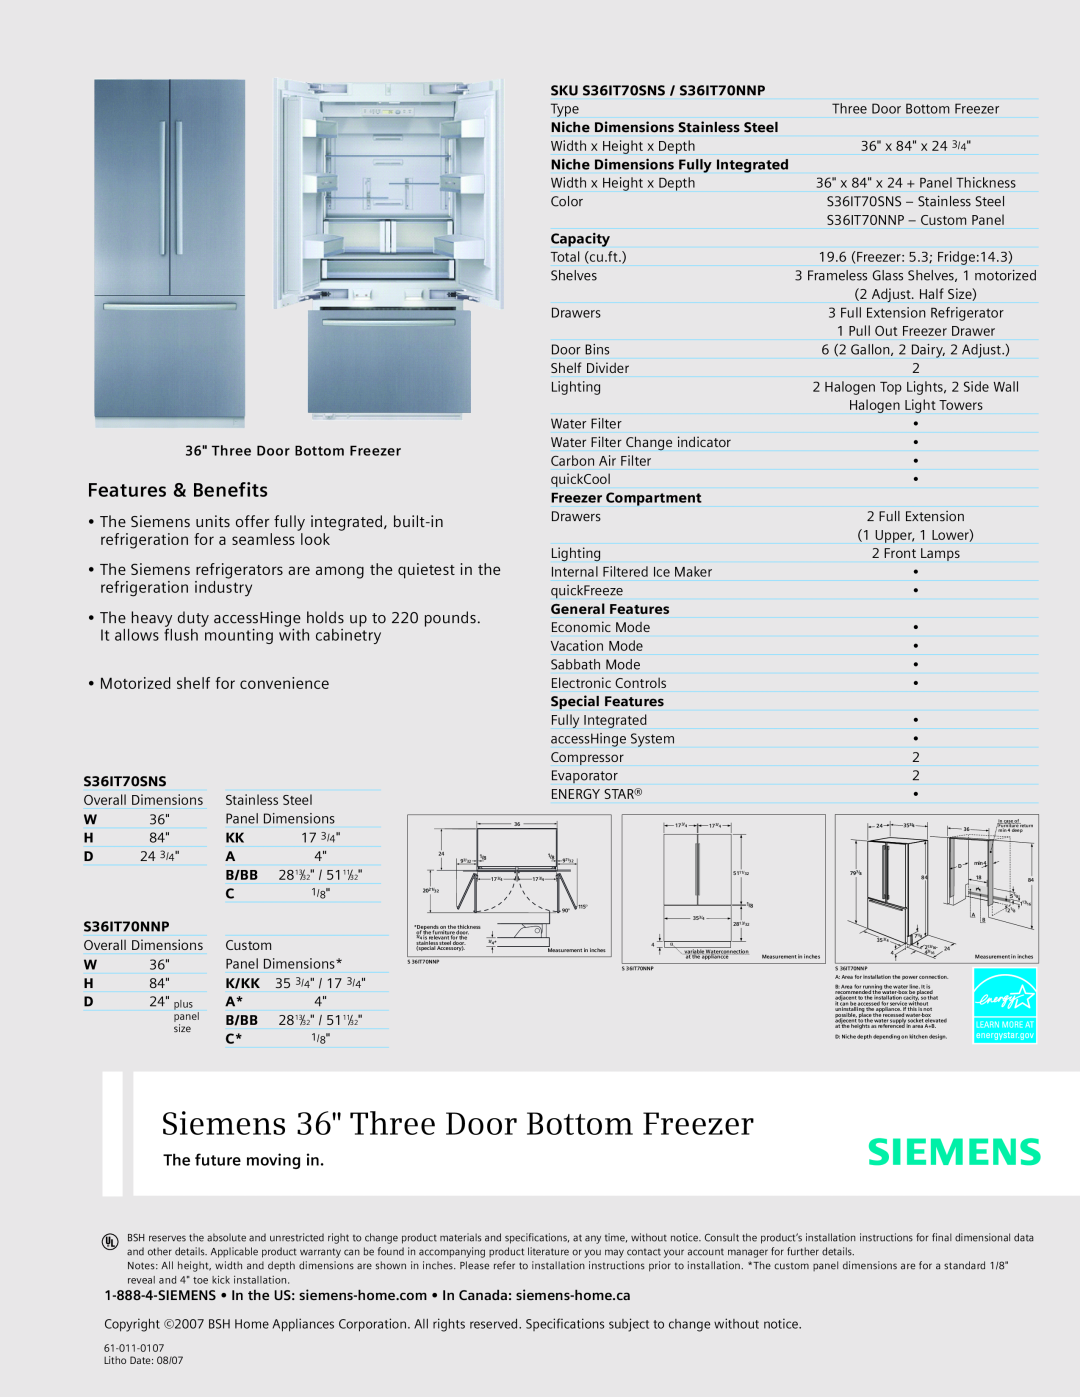 Siemens S36IT70SNS specifications Siemens 36 Three Door Bottom Freezer, Features & Benefits, The future moving in 